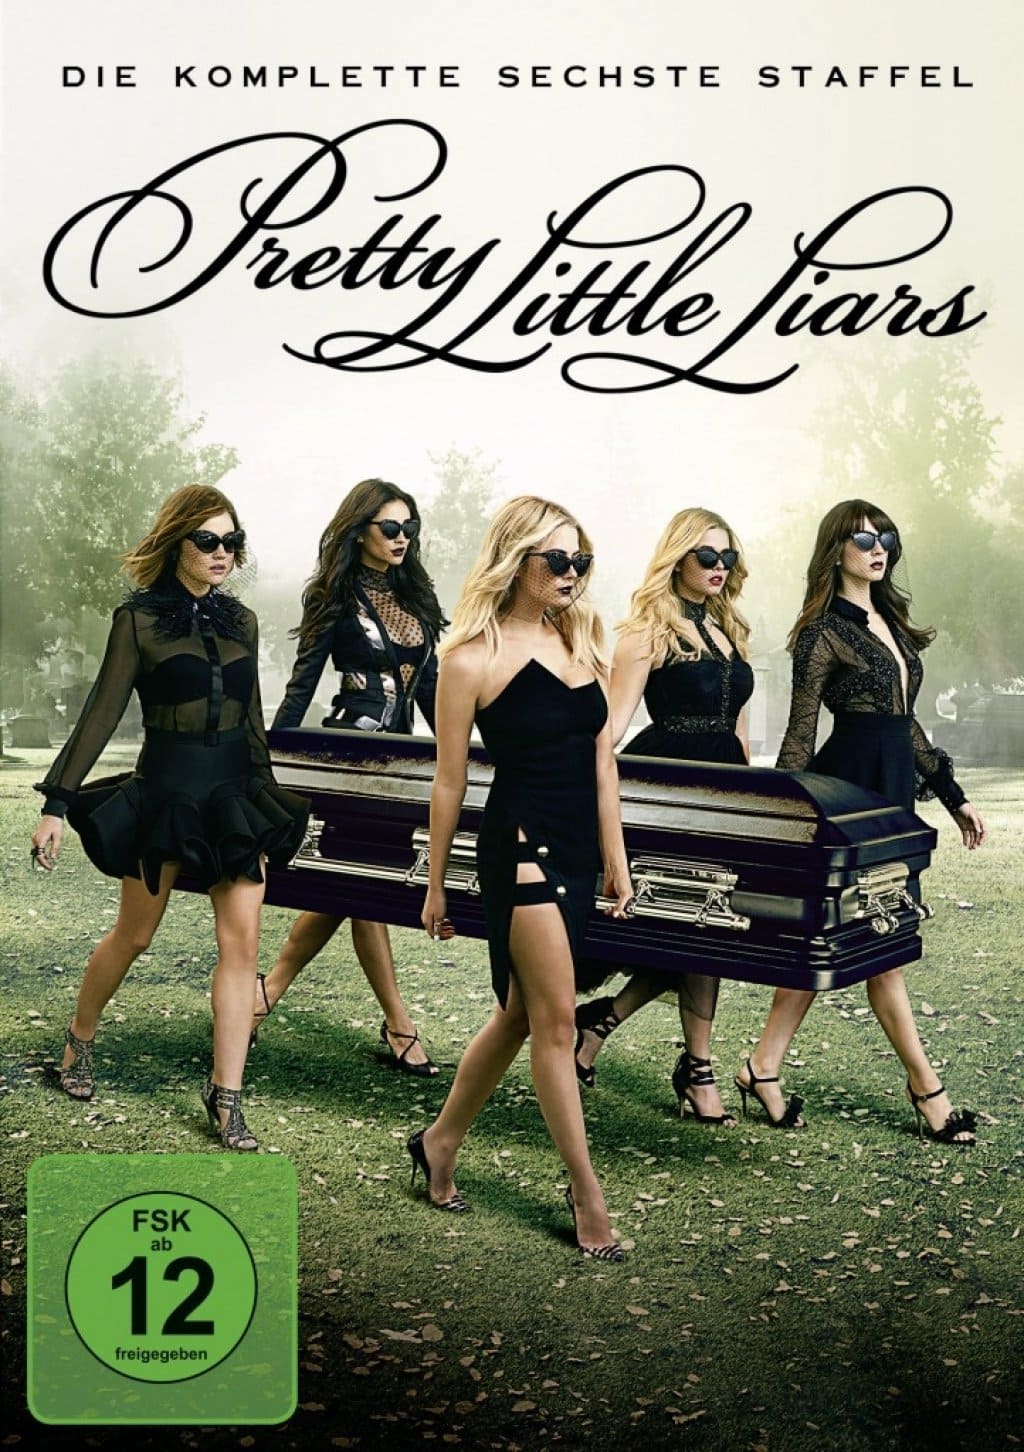 Pretty Little Liars Season 6